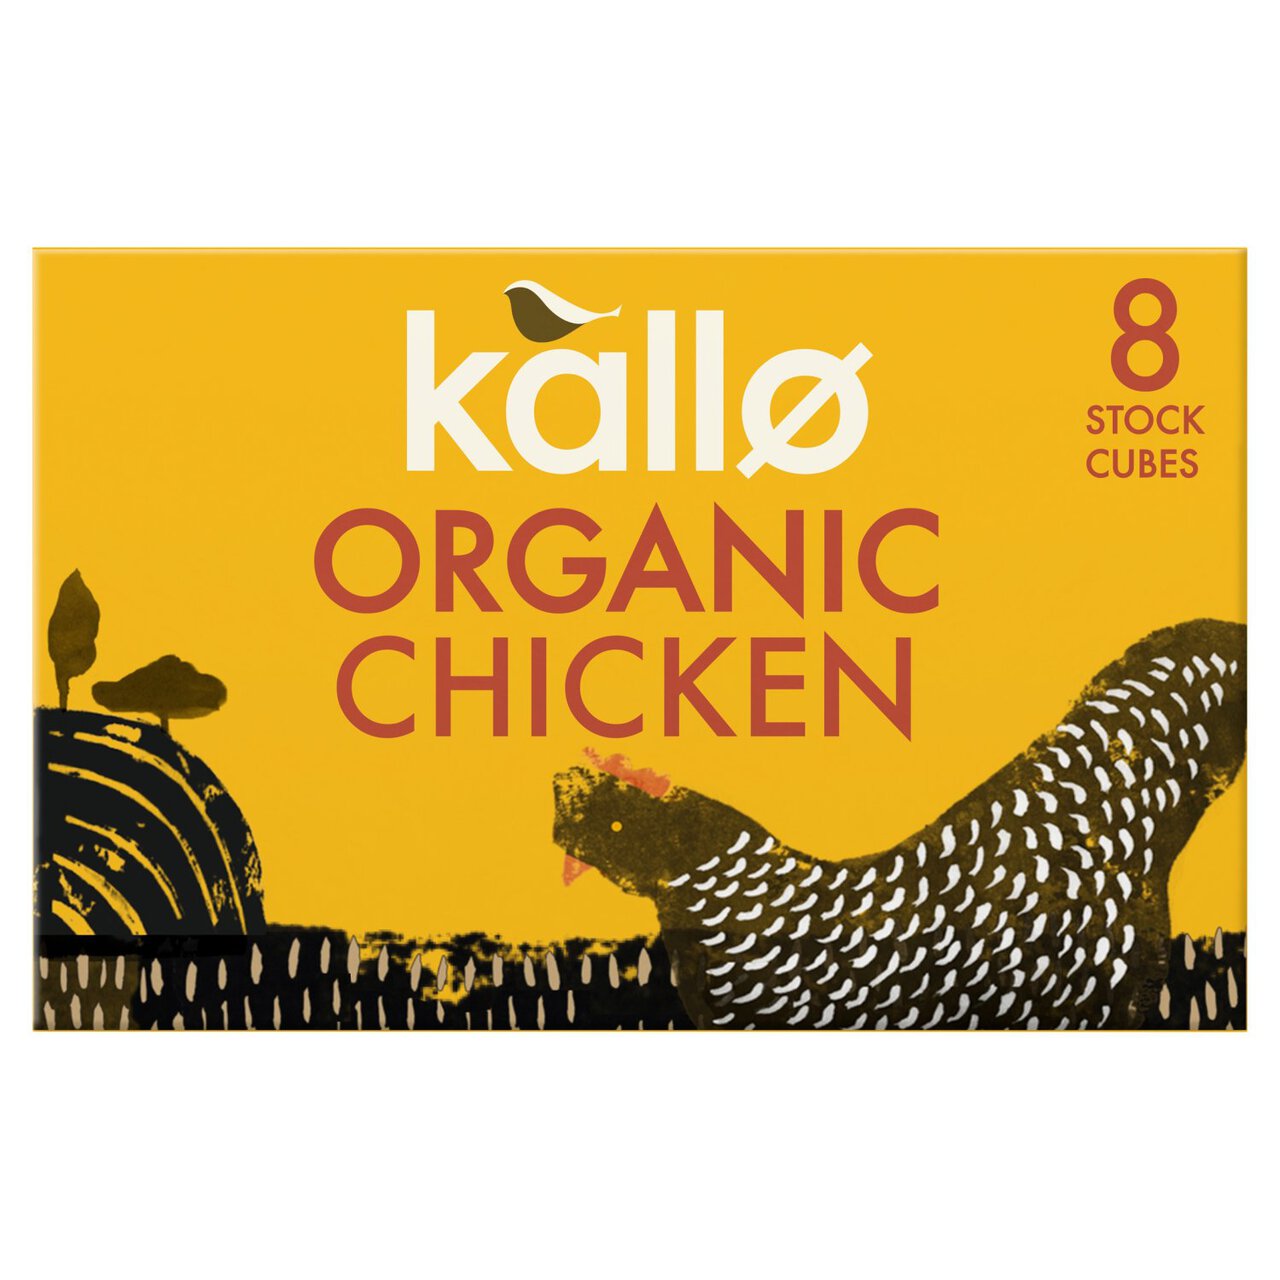 Kallo Organic Chicken Stock Cubes 8 x 11g